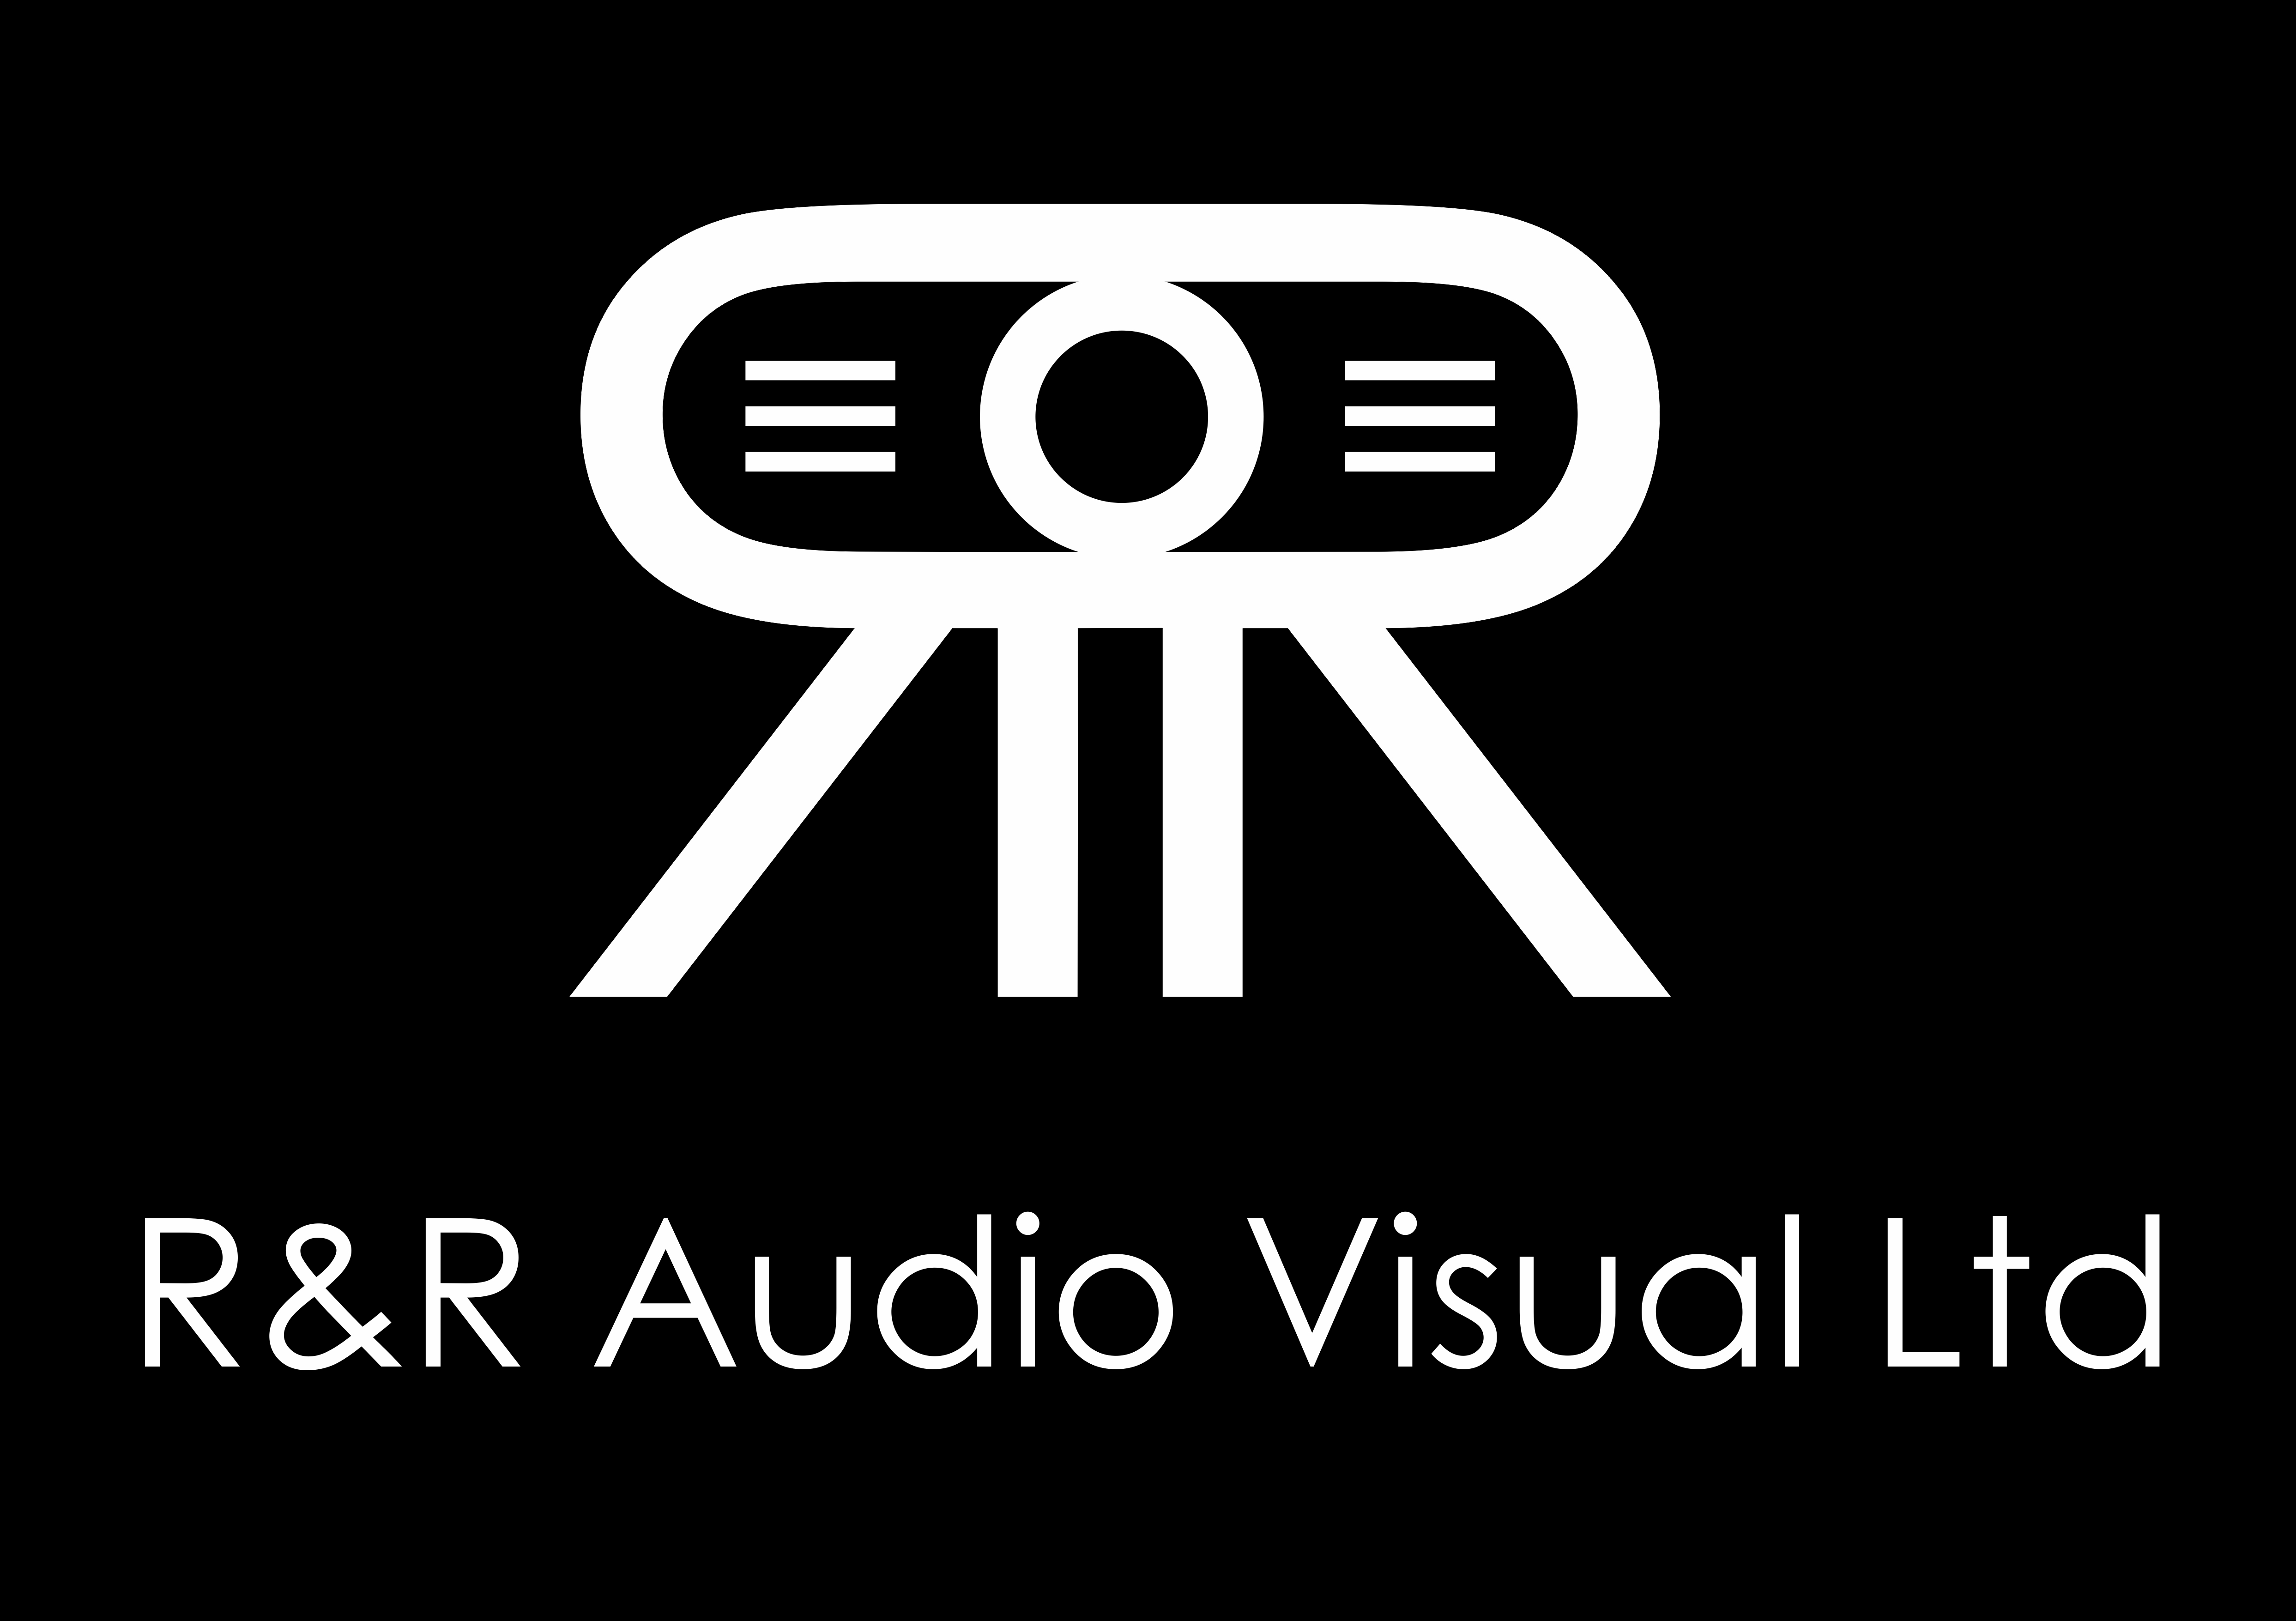 Kent Audio Visual, Inc.